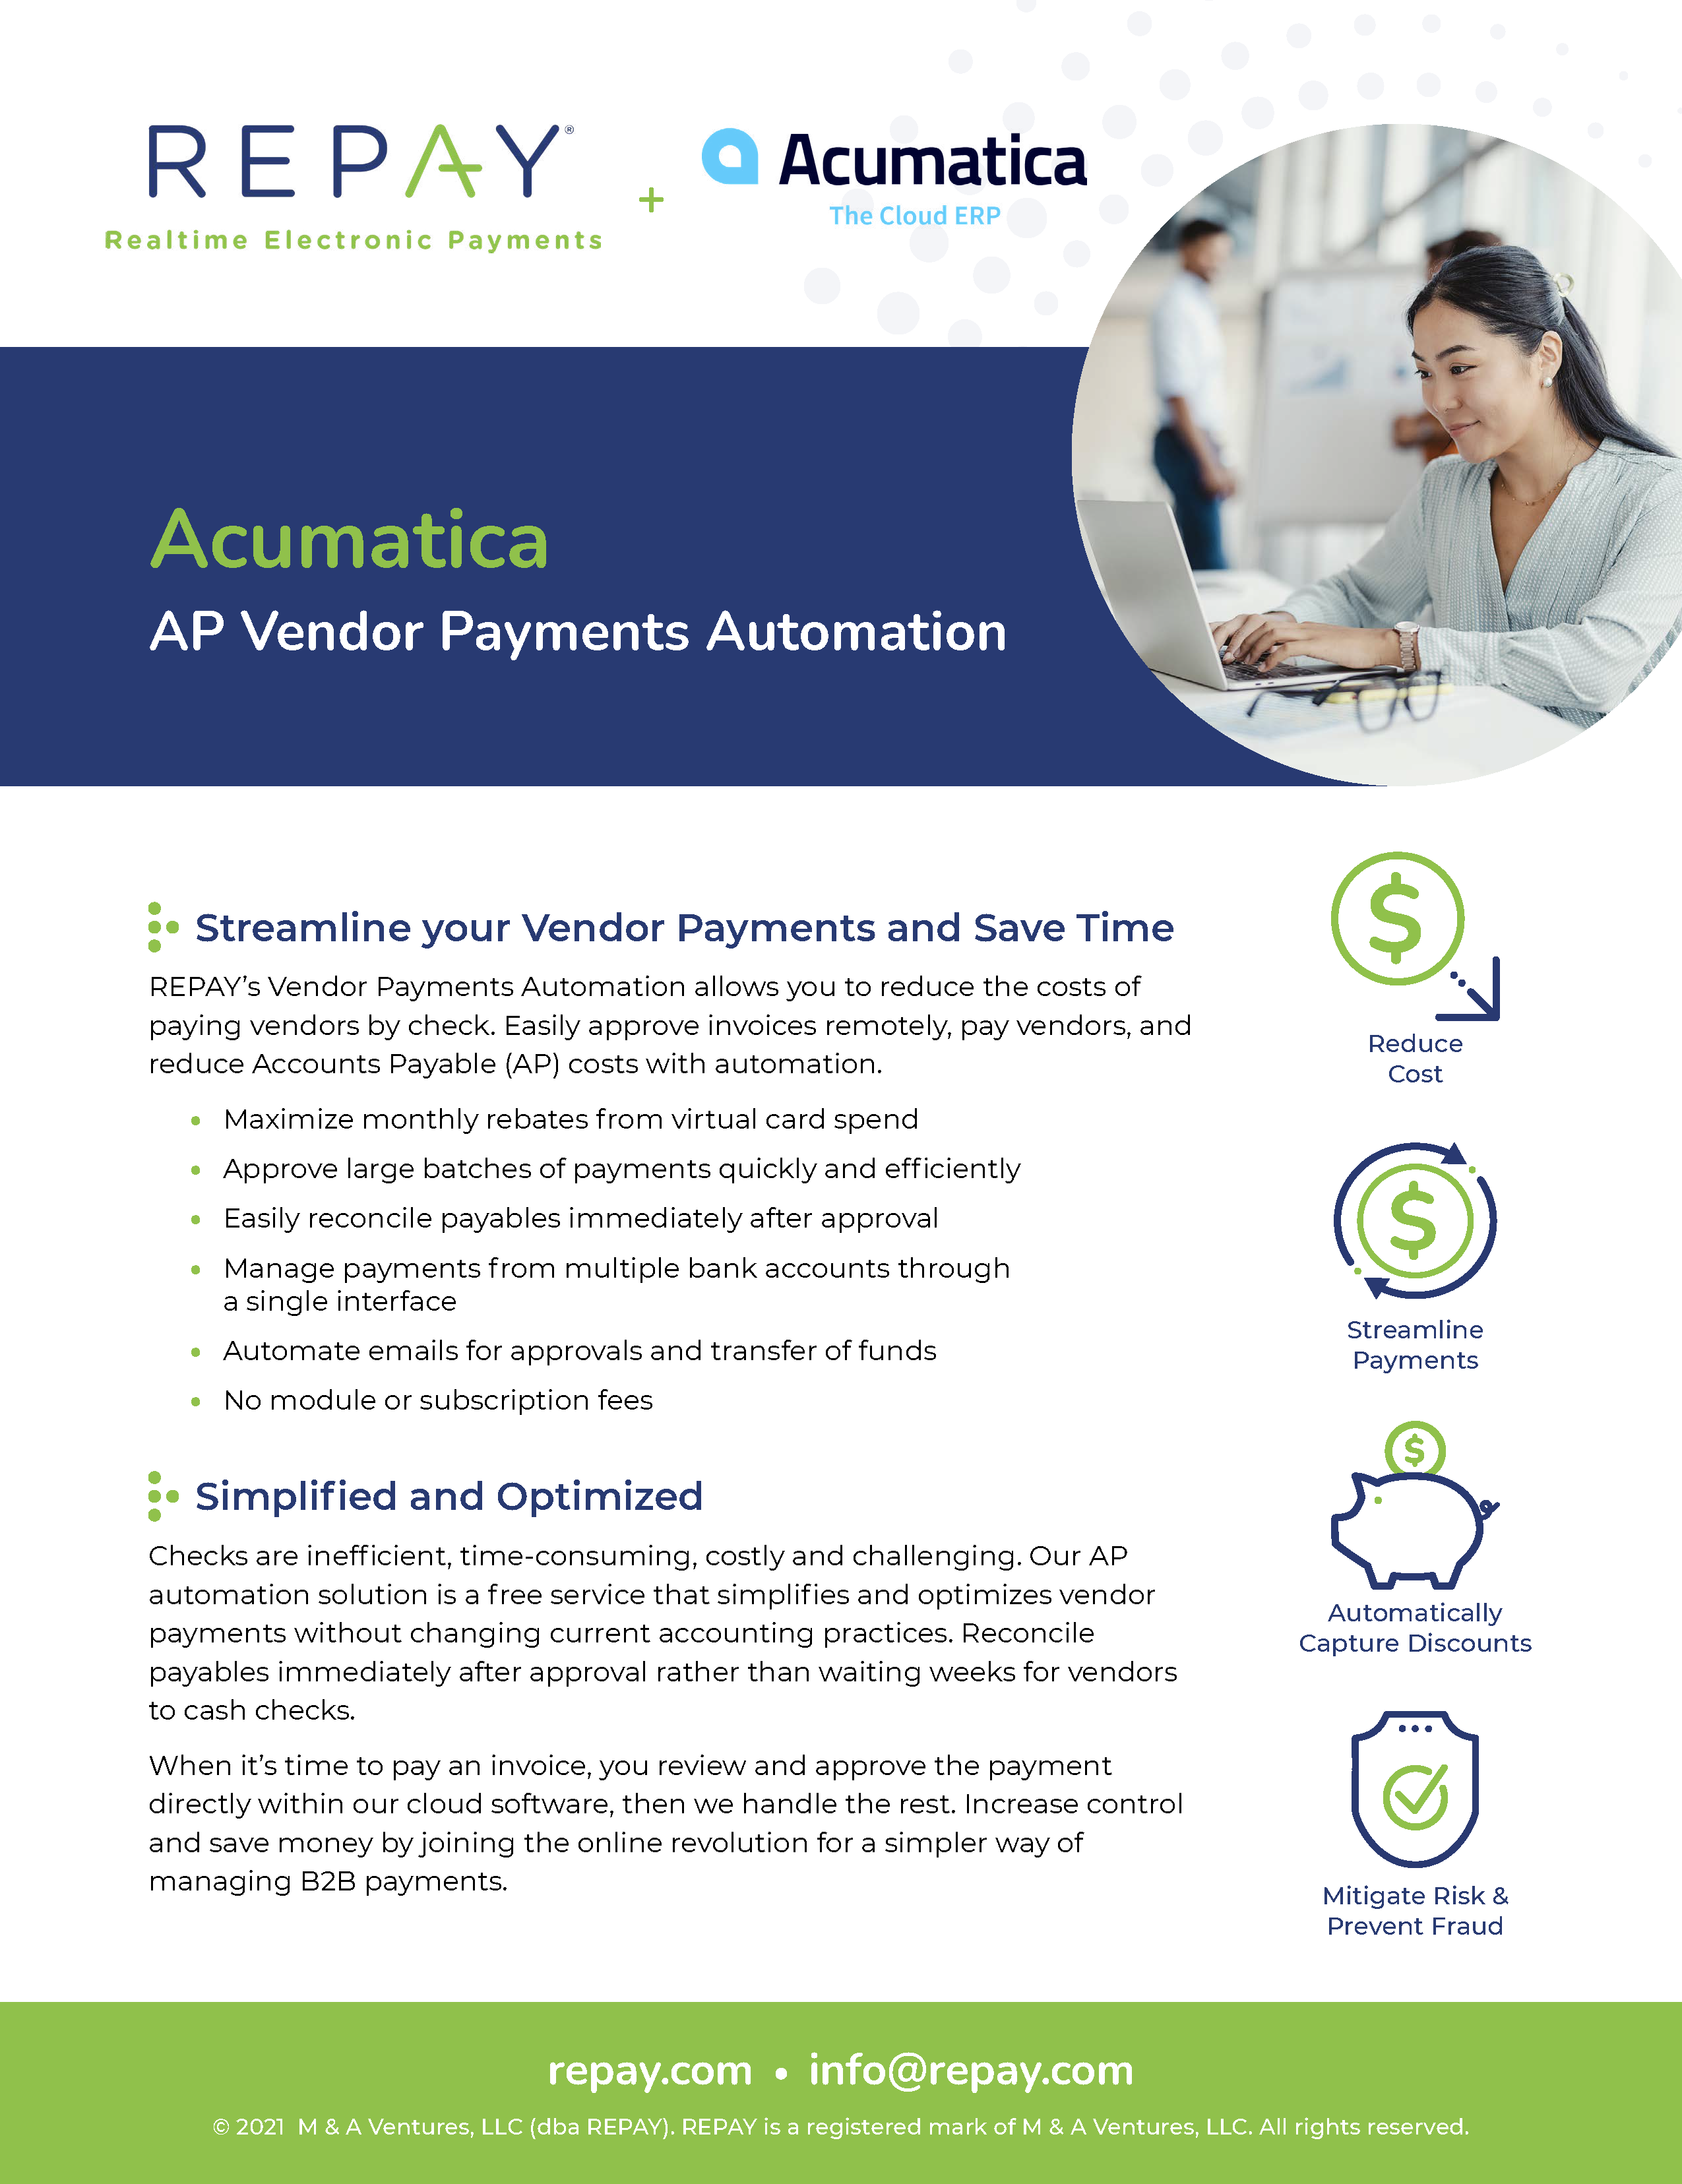 AP Vendor Payments Automation for Acumatica